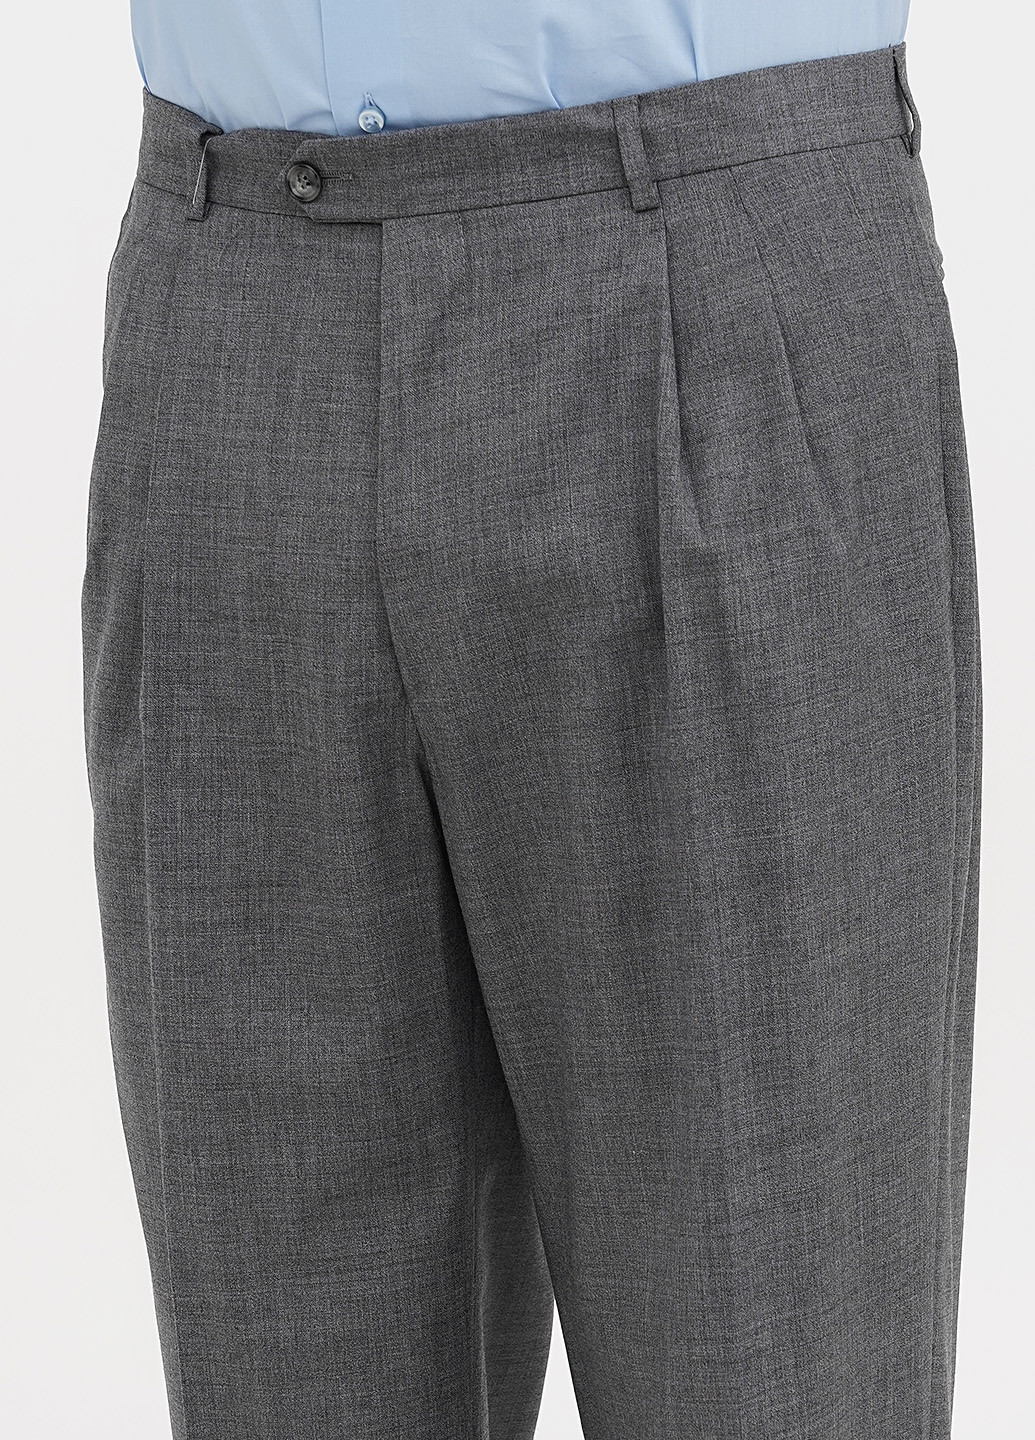 Светло-серые классические демисезонные классические брюки Gulliver